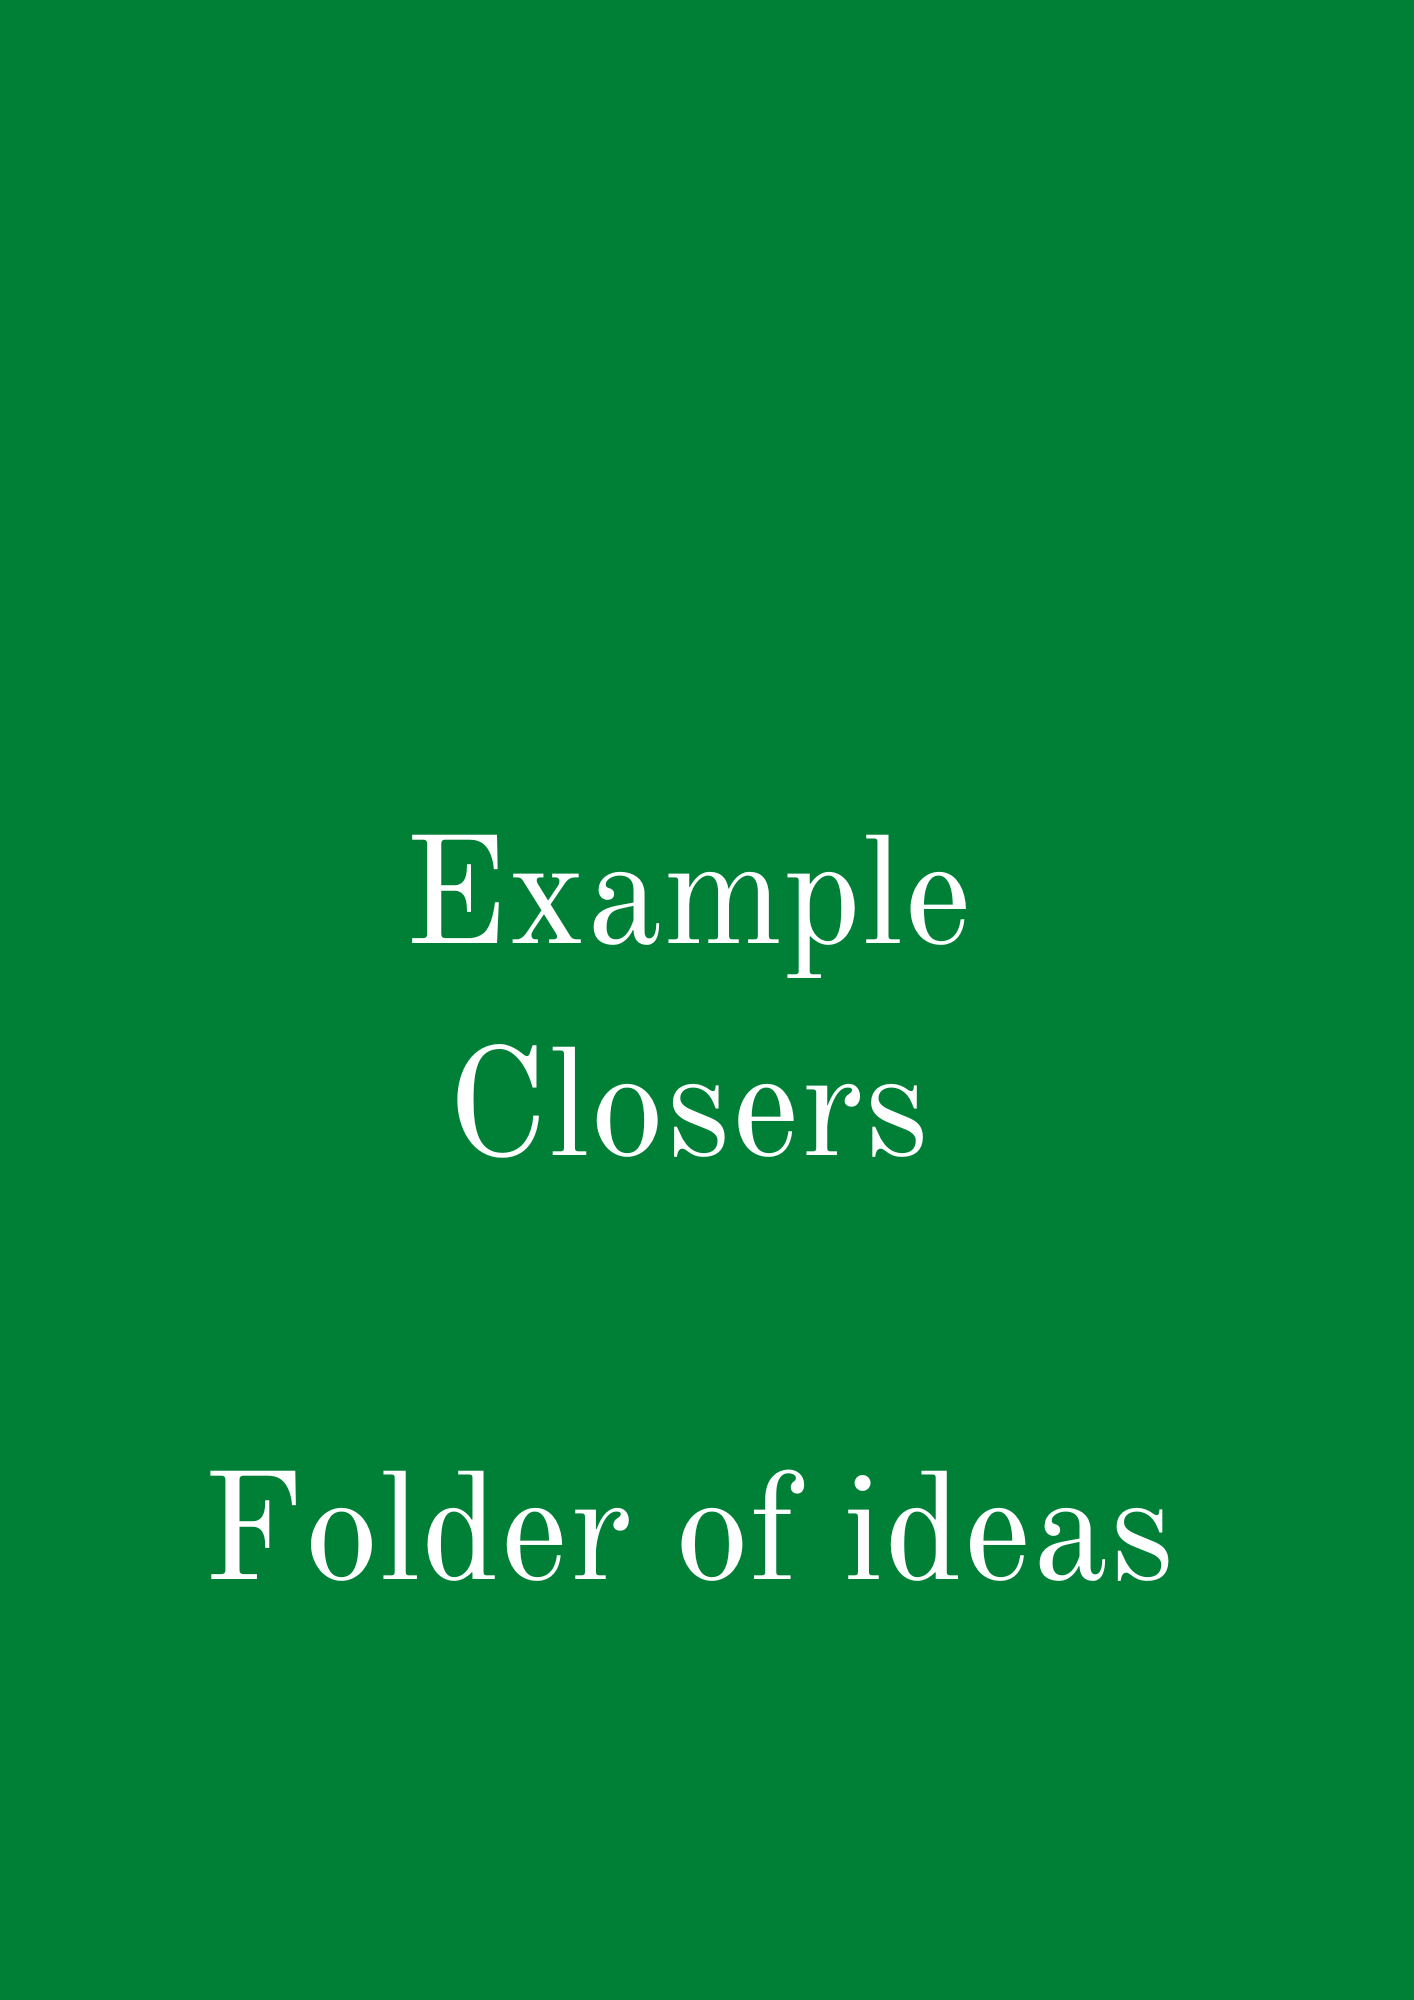 Example Closers - Folder